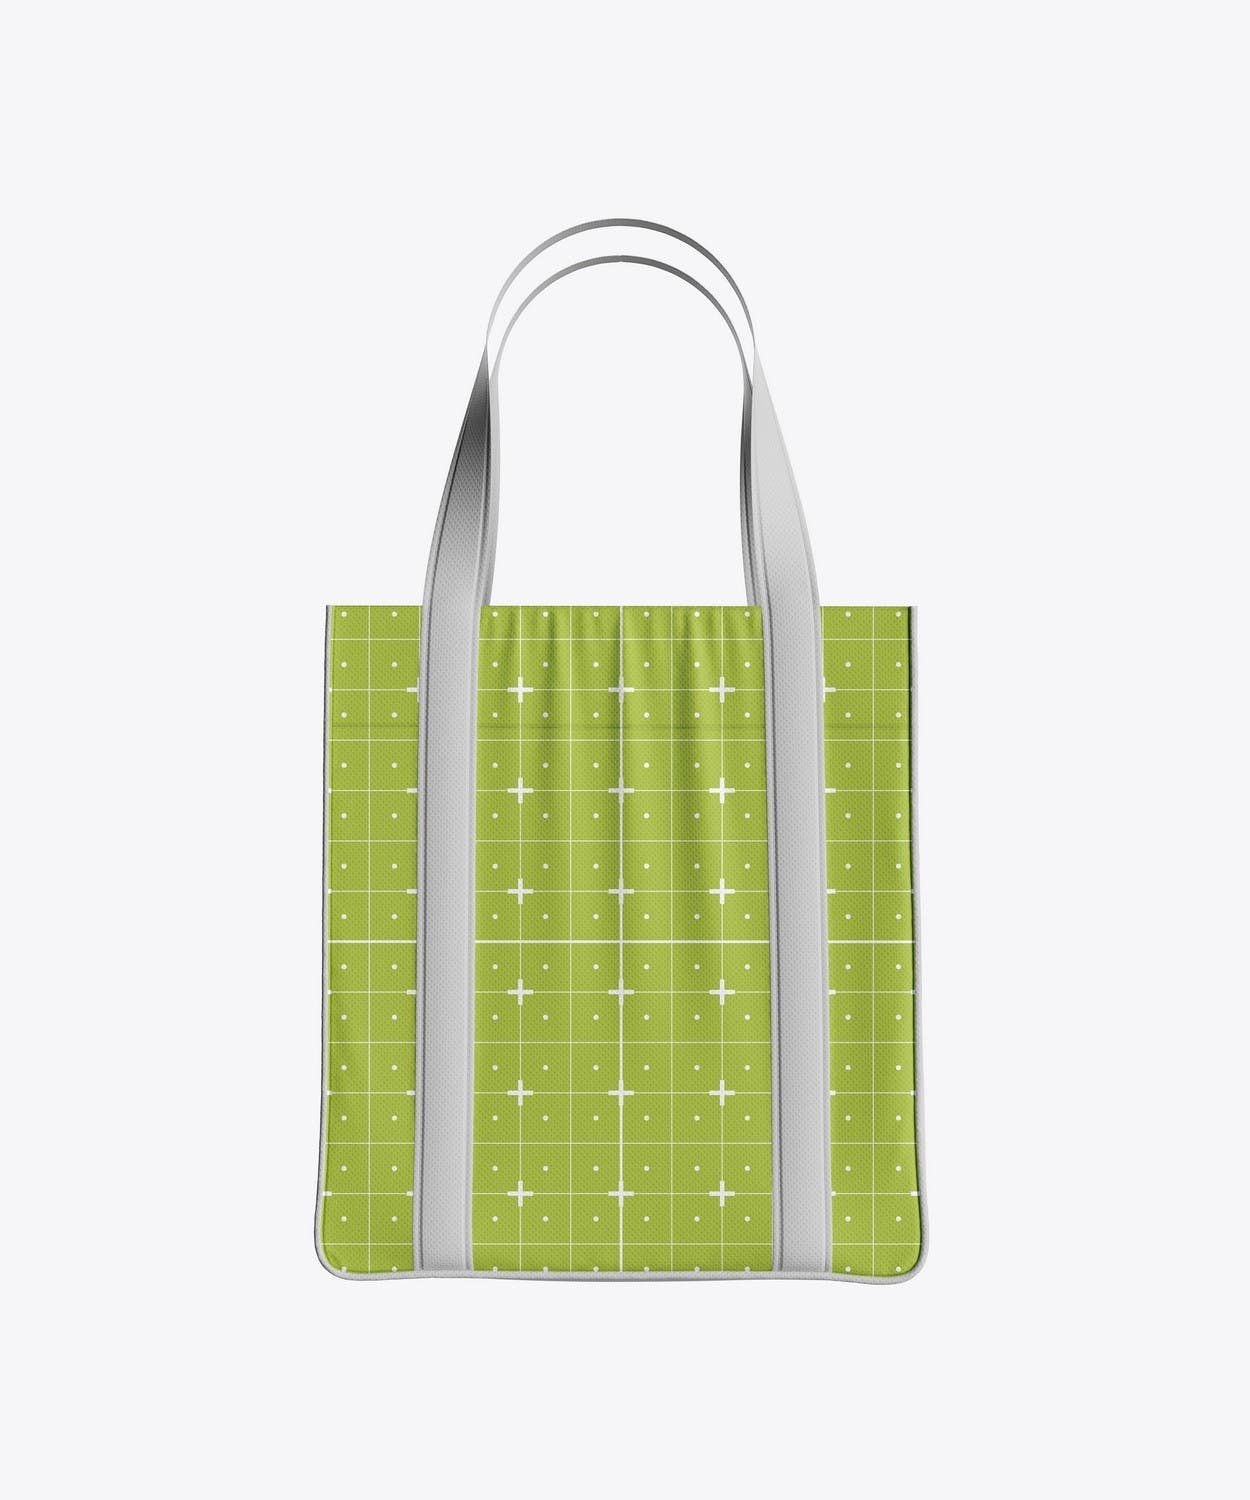 生态帆布袋包装Logo设计样机 Eco Canvas Bag Mockup 样机素材 第5张